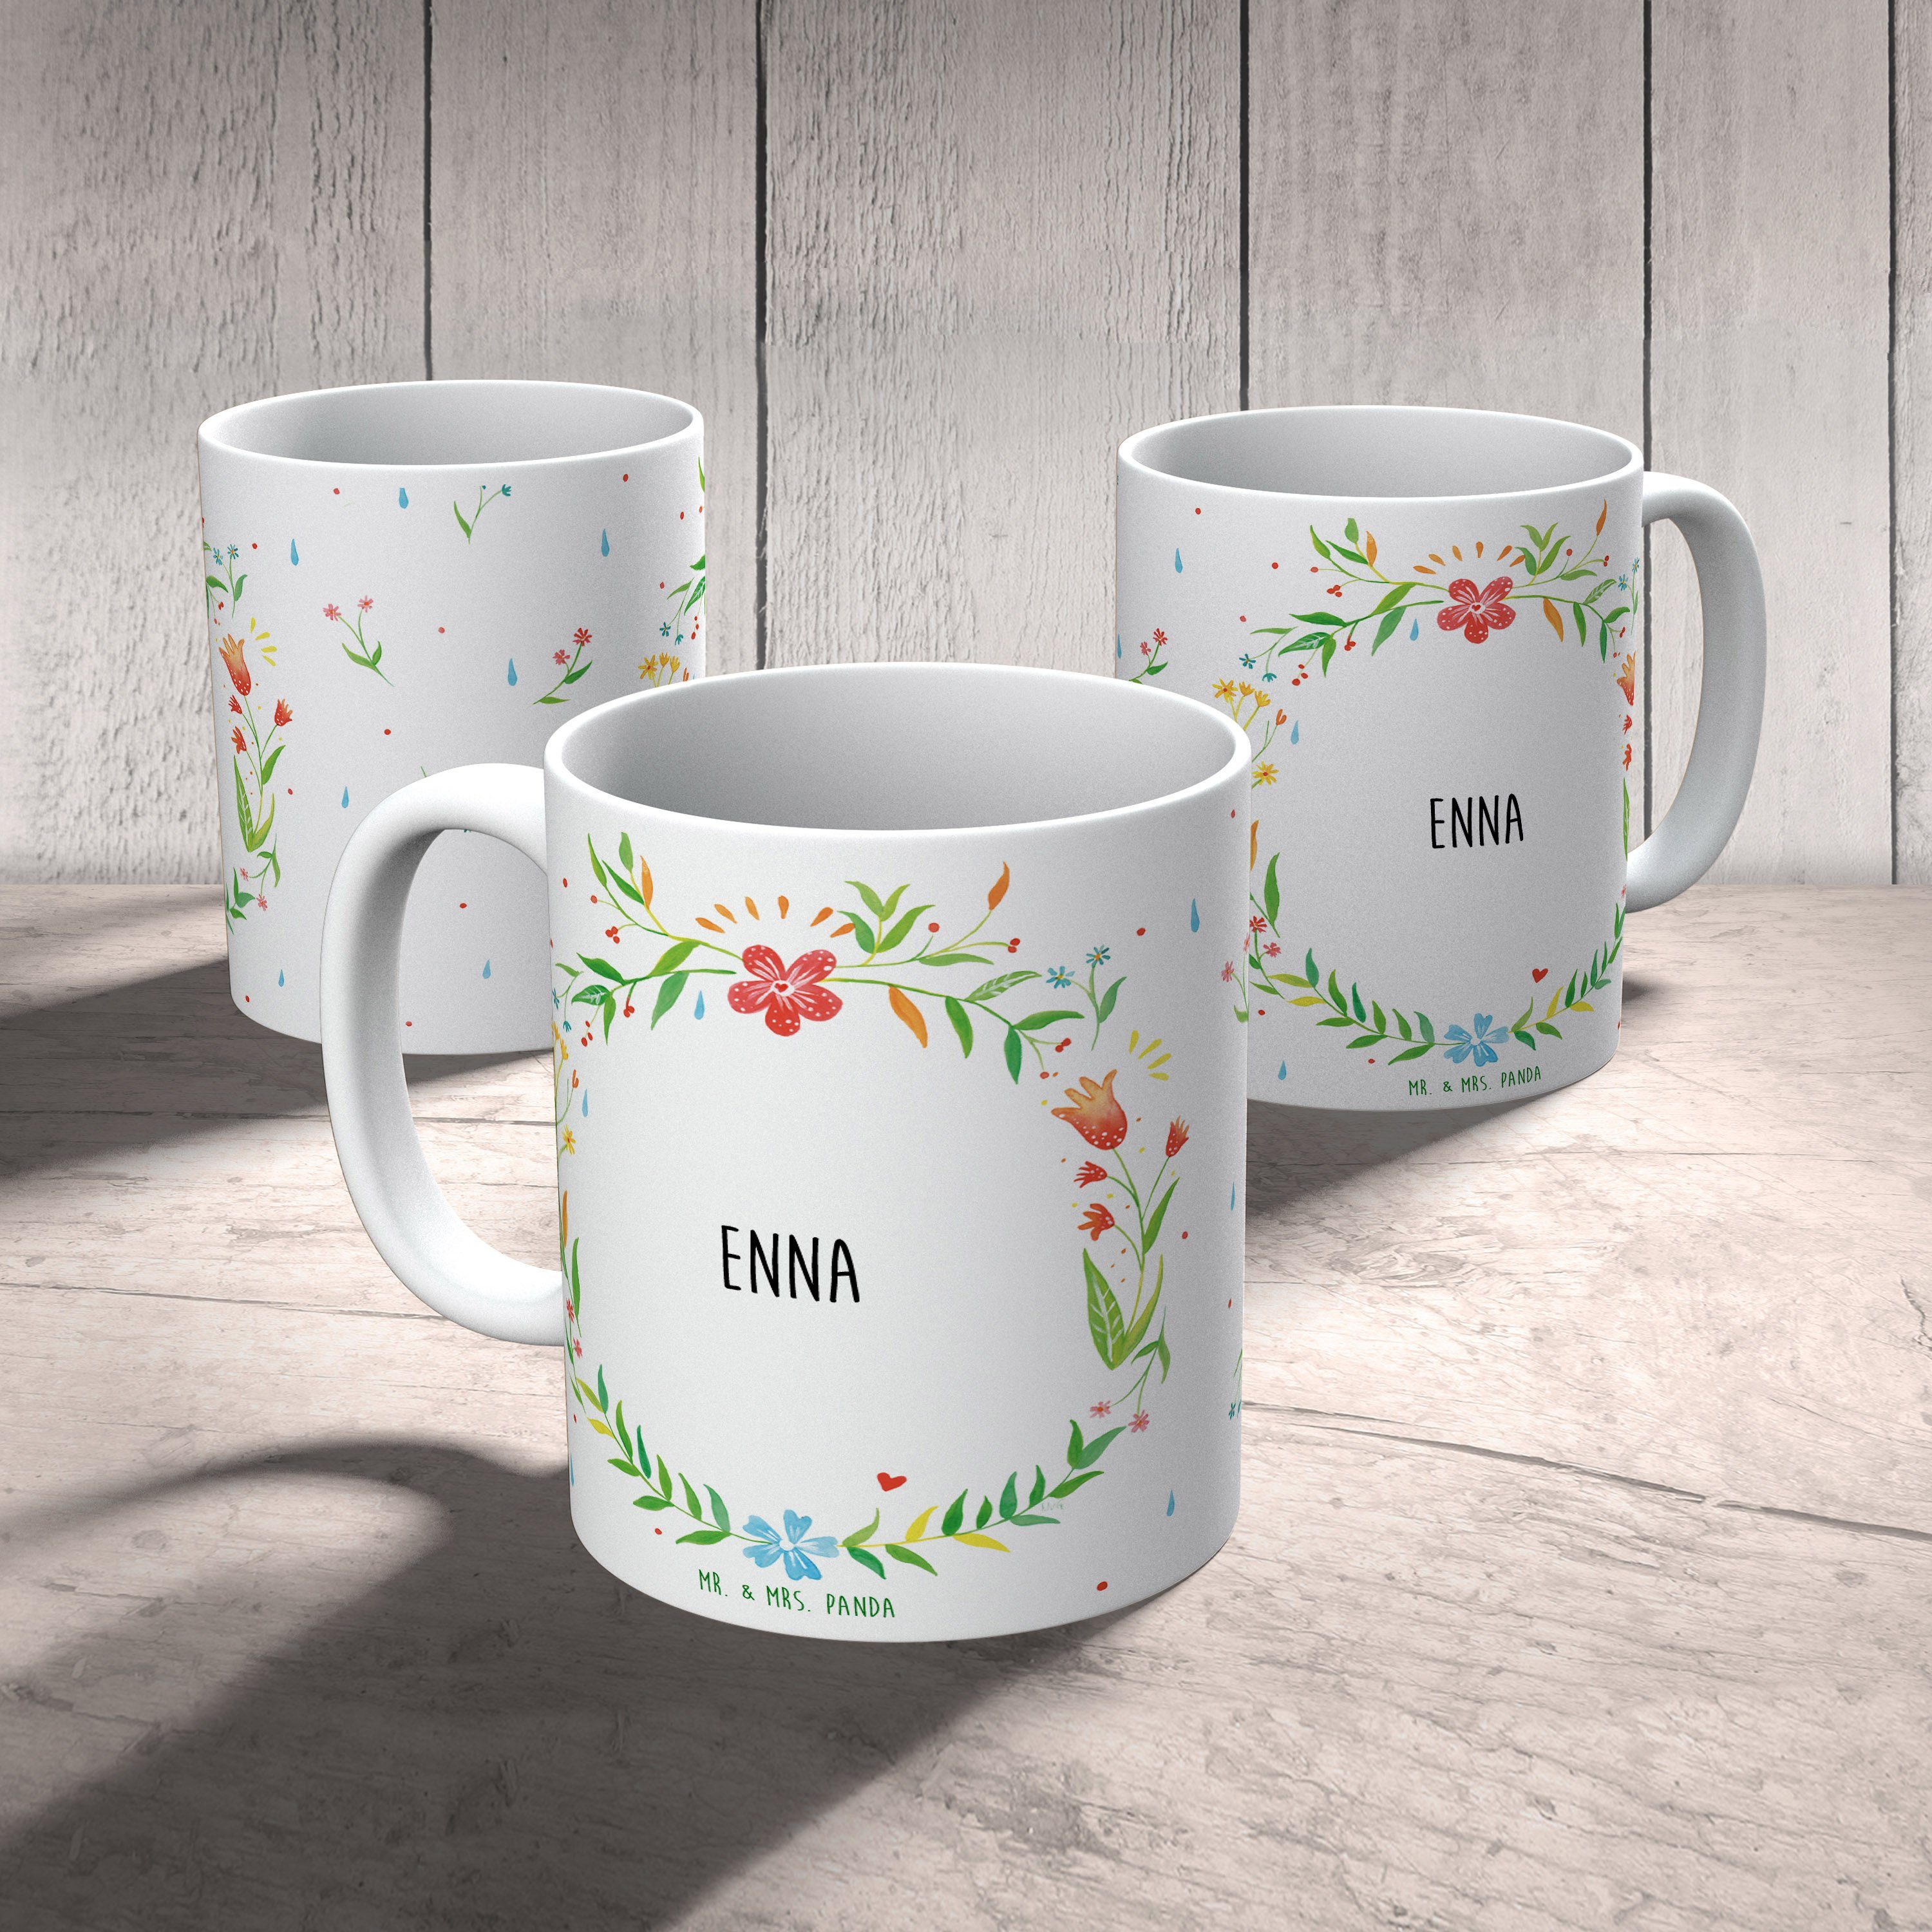 Mr. & Keramik Panda Tasse, Geschenk Geschenk, - Kaffeebecher, Teebeche, Tasse Keramiktasse, Mrs. Enna